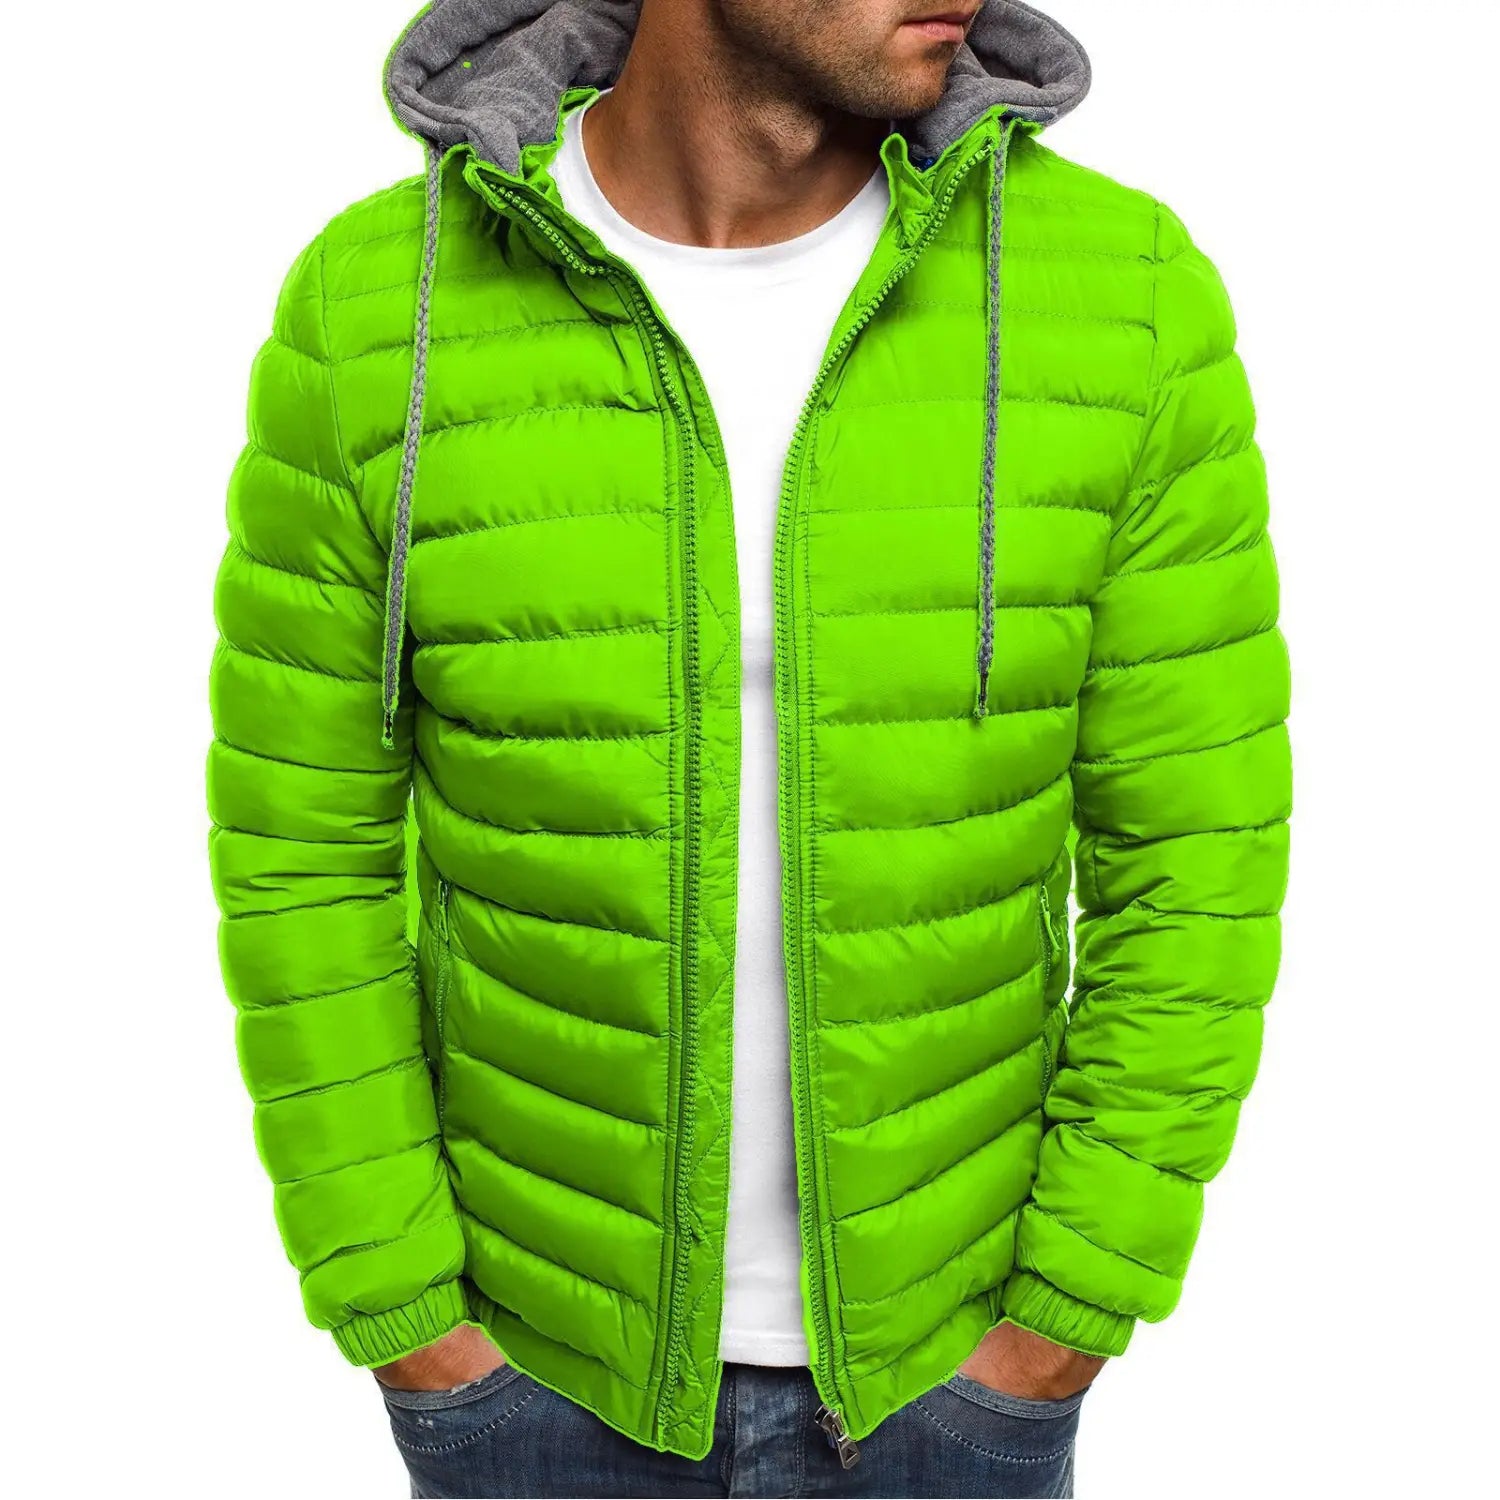 Lovemi - Warm Hooded Casual Cotton Jacket